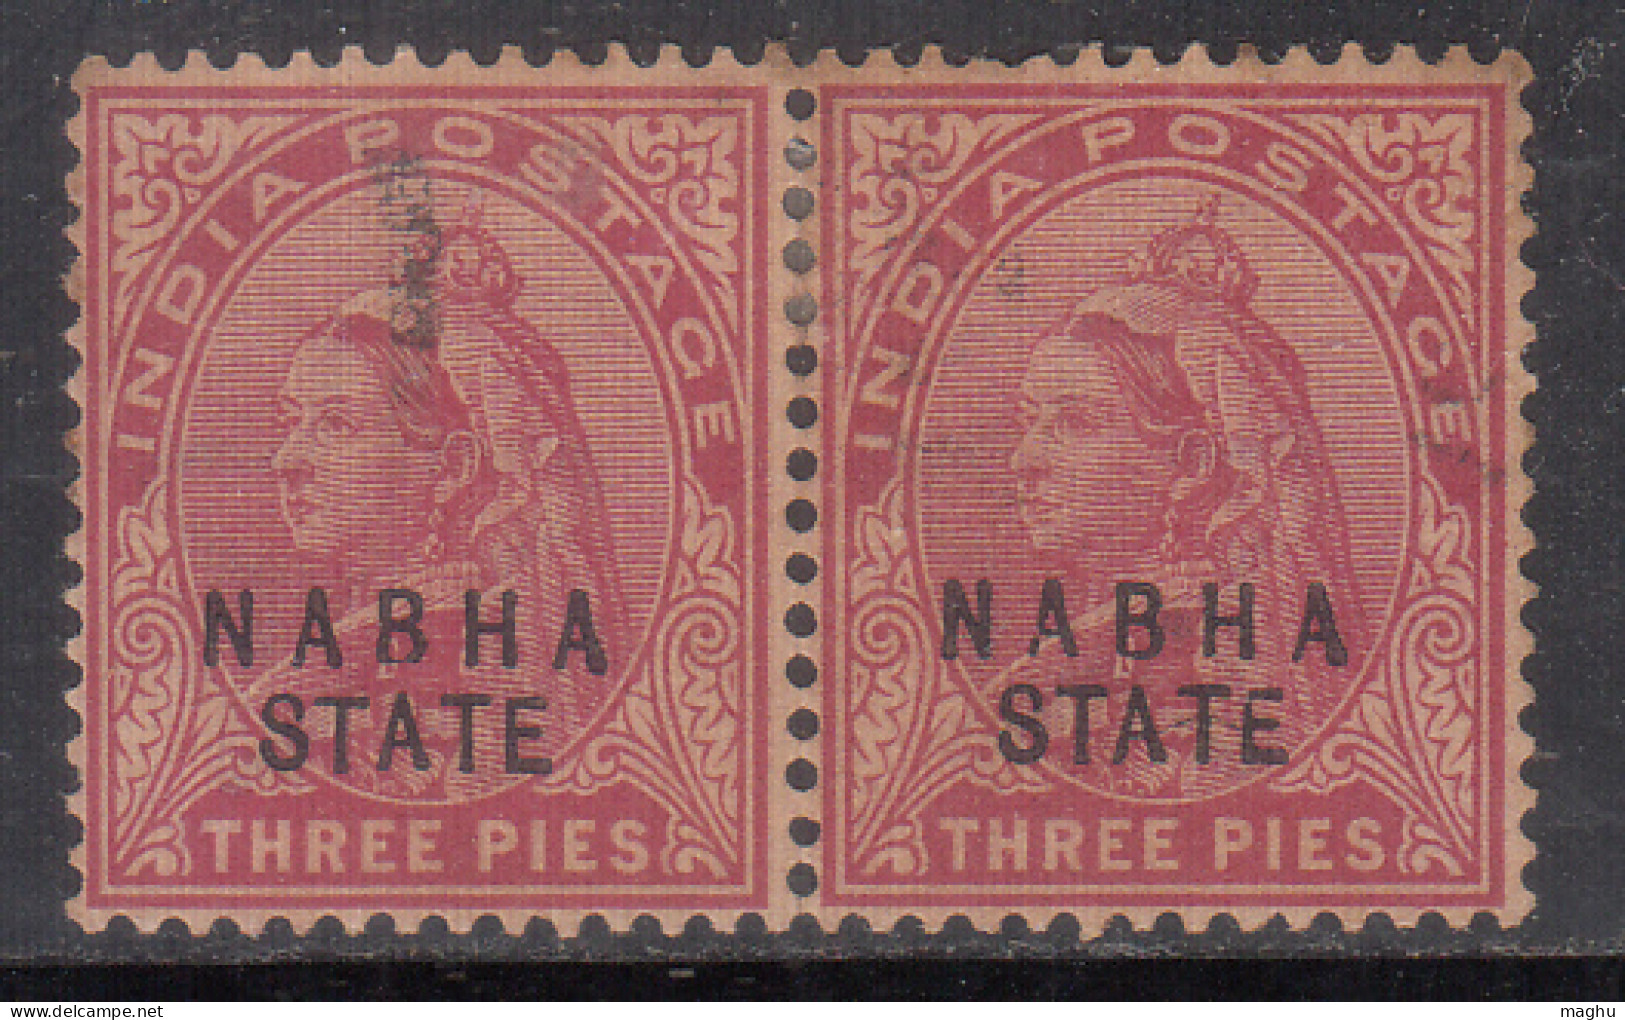 EFO Pair, 'A & E Partial Broken' Ovpt Variety, 3p MH QV 1900 Nabha State SG36, British India - Nabha